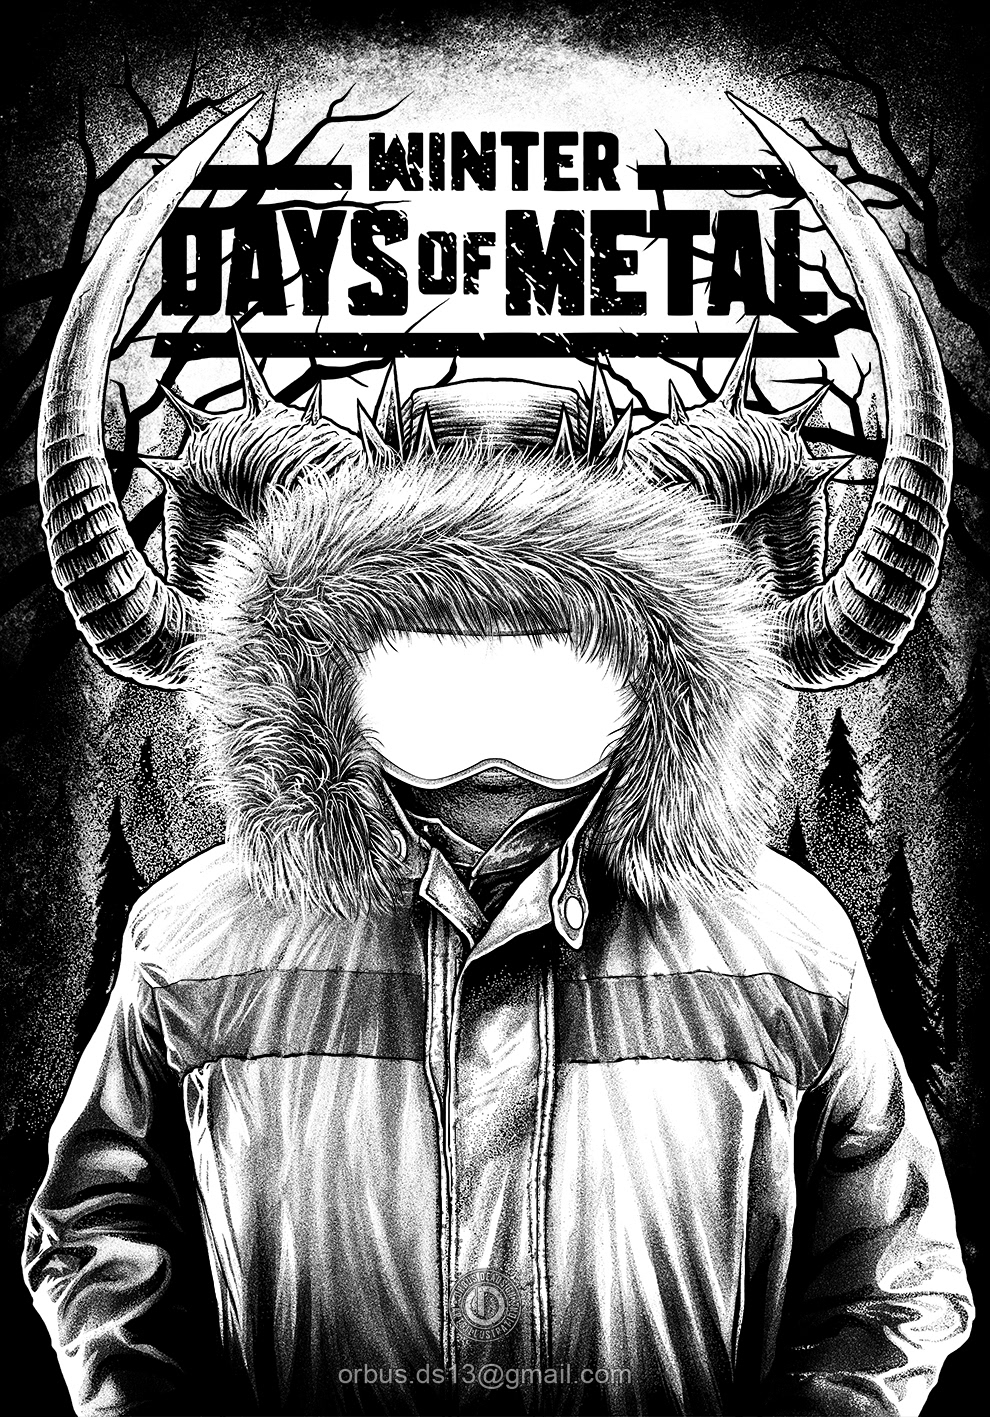 Metaldays Metalfest GigPoster bandmerch HeavyMetal deathcore GothicMetal tshirtdesign artworkforsale orbusdeadsign